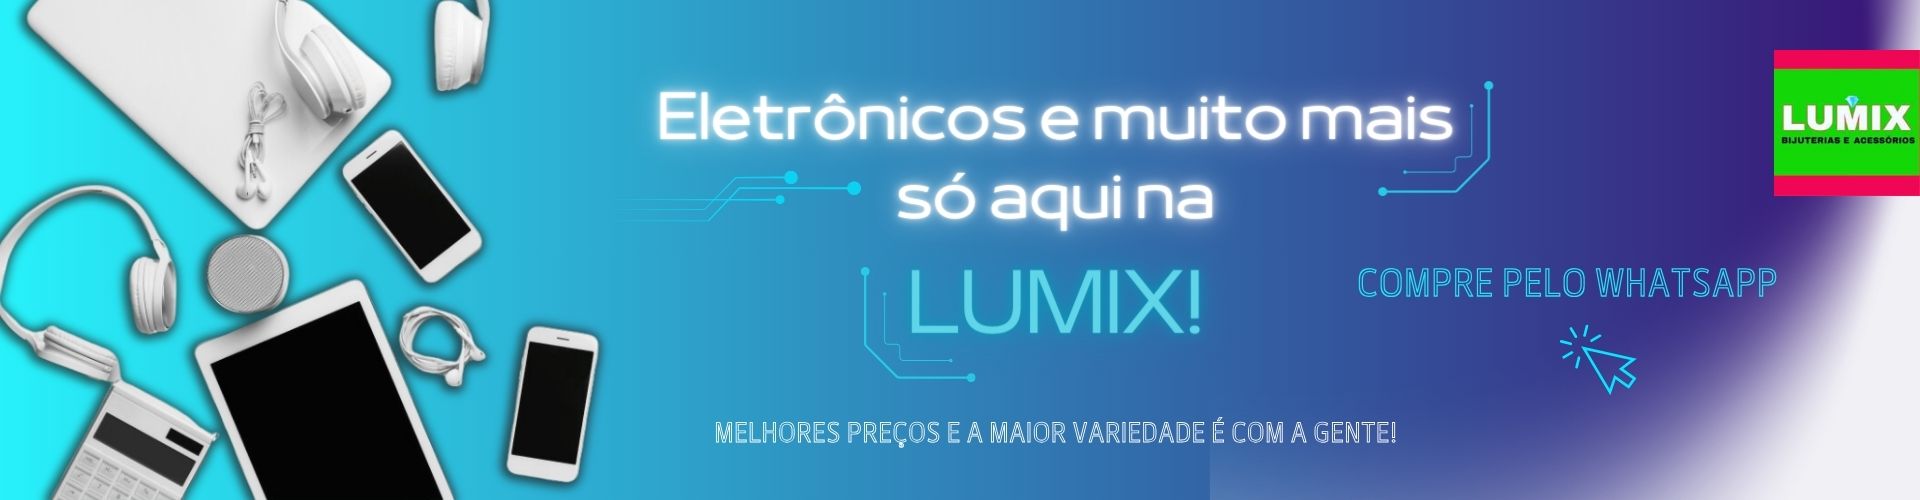 Lumix Eletrônicos